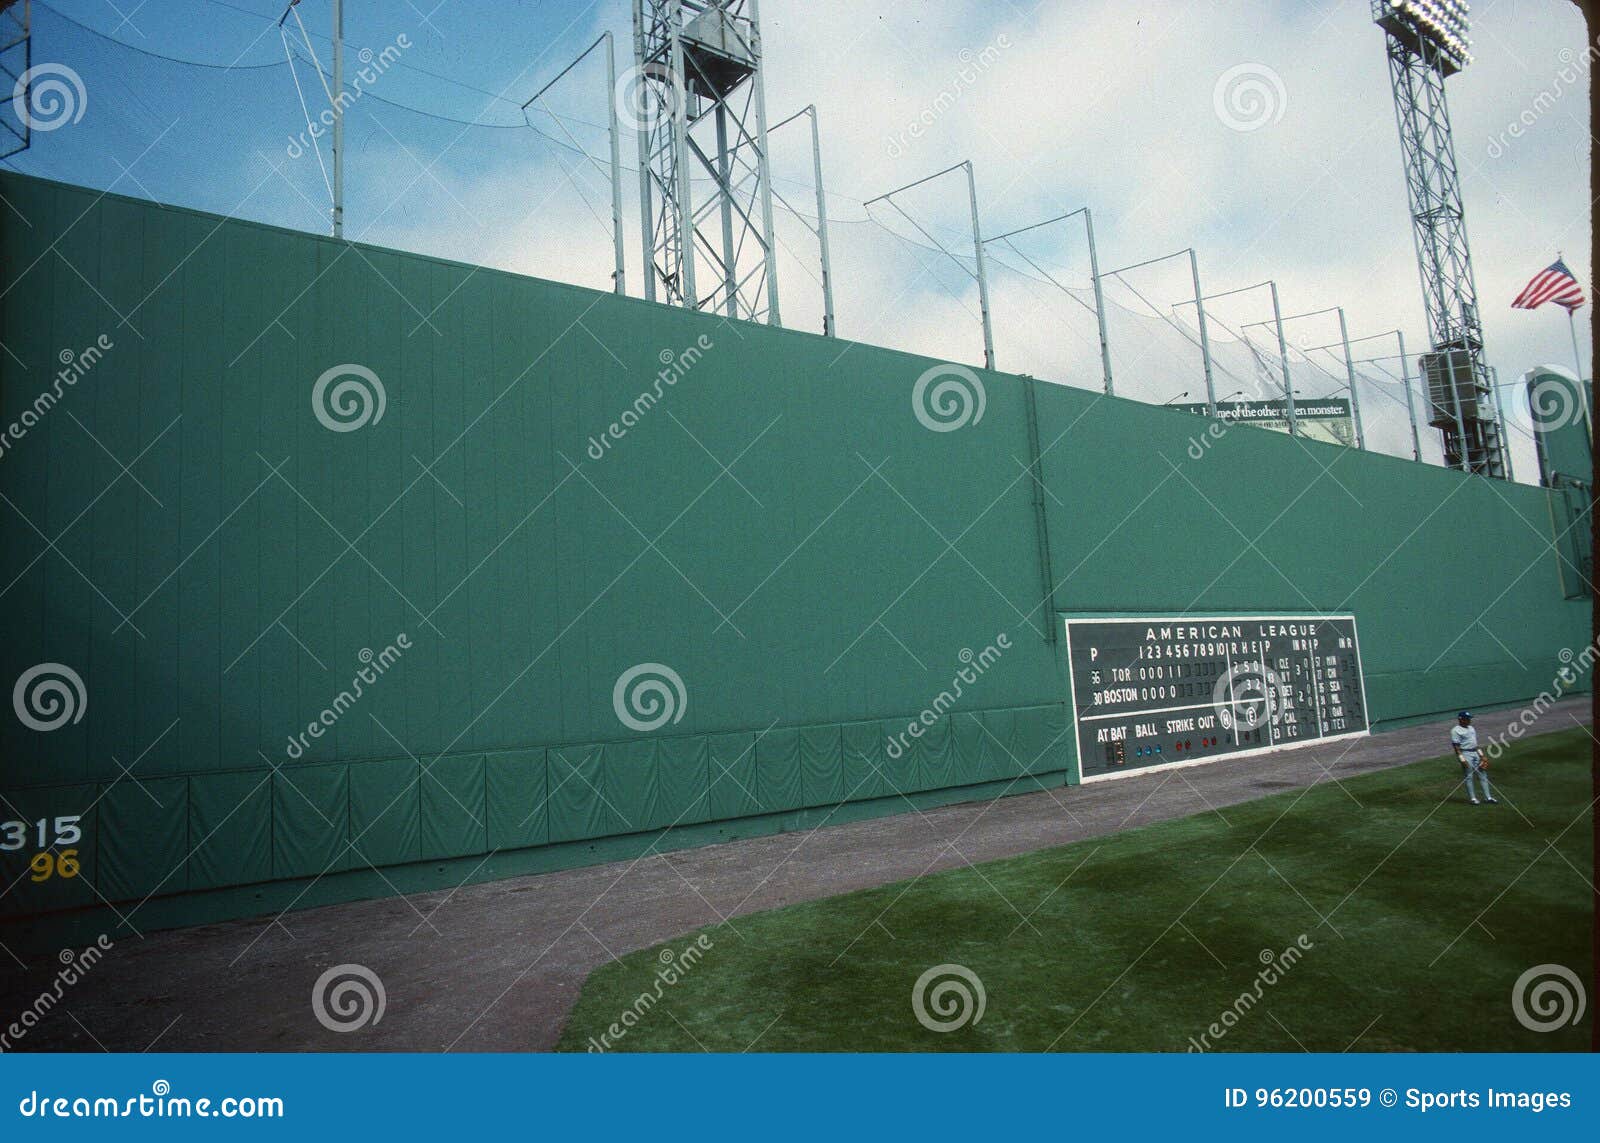 Green Monster Wall at Boston Red Sox Editorial Stock Image - Image